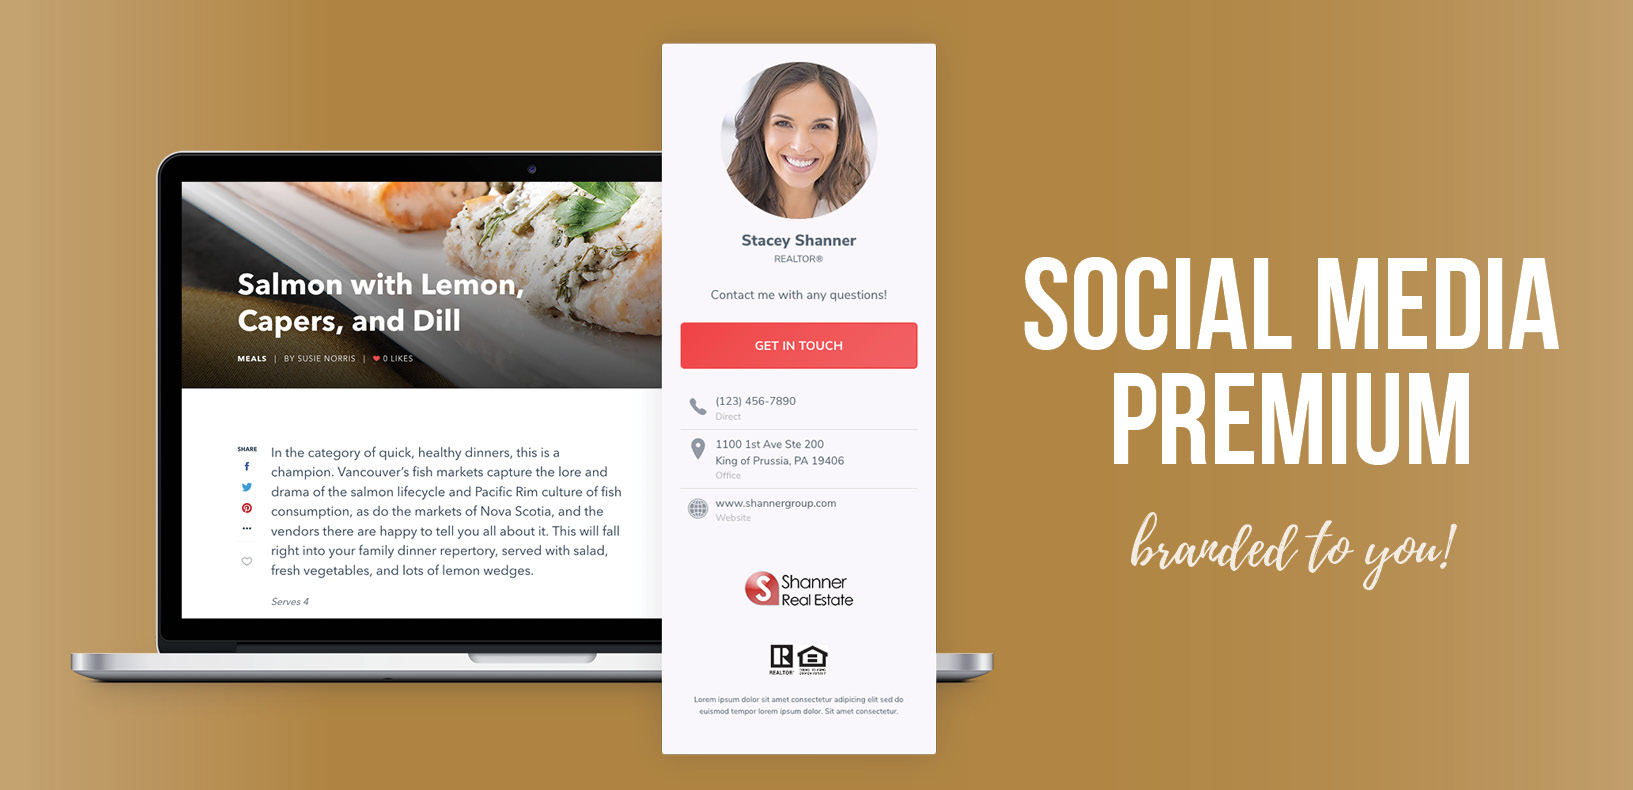 social media shares premium